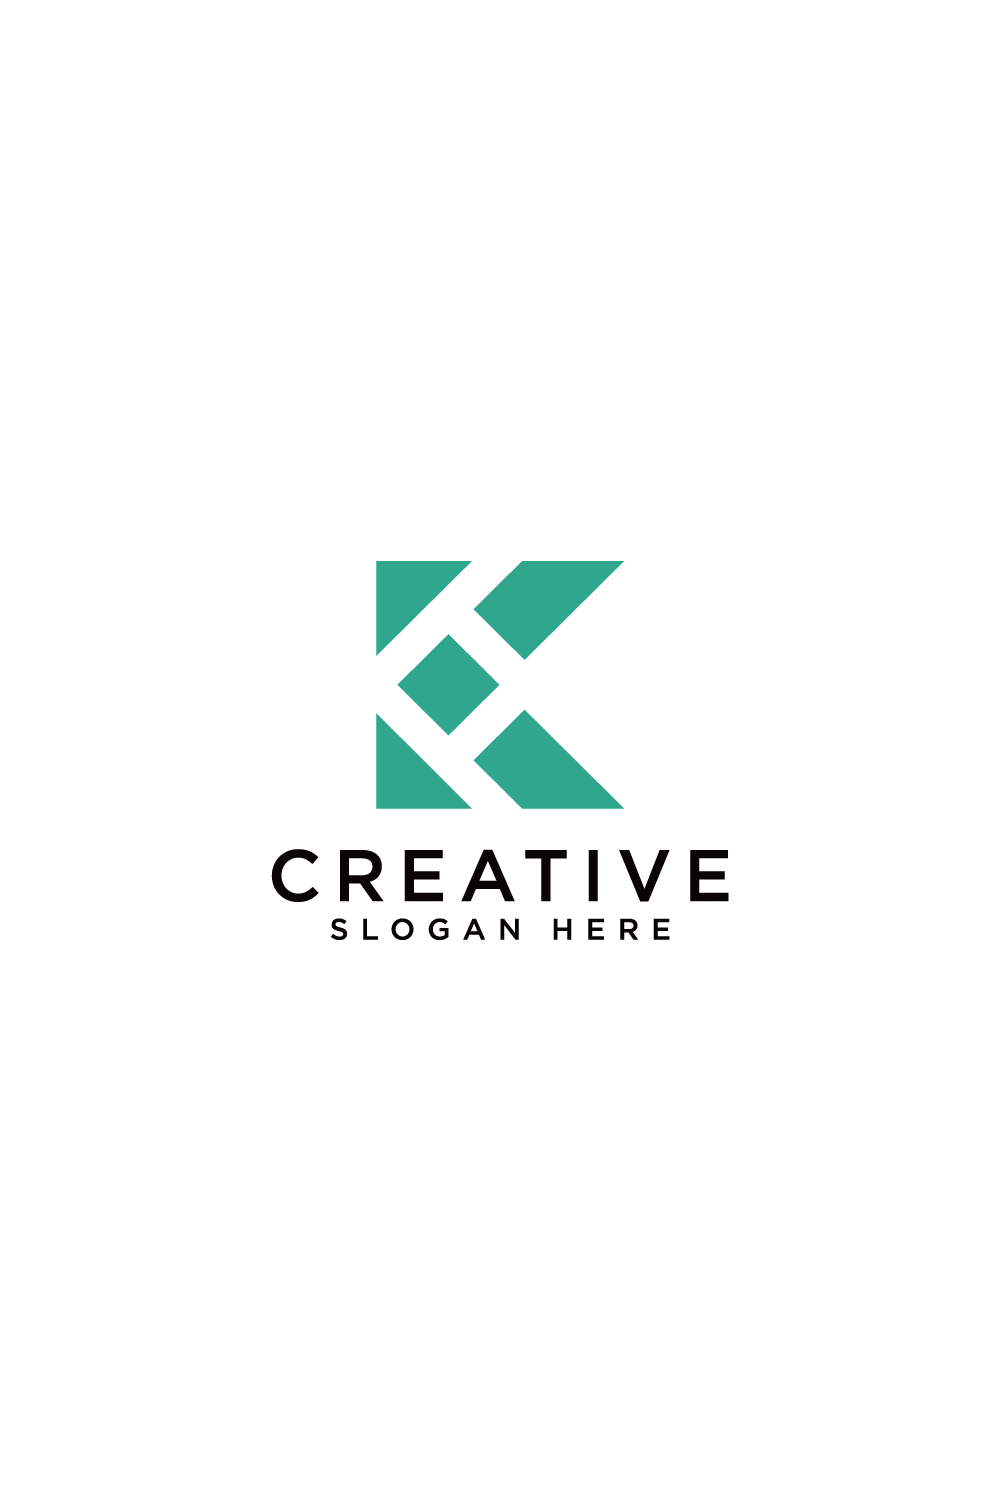 K Letter Logo concept Creative Minimal emblem design template pinterest preview image.